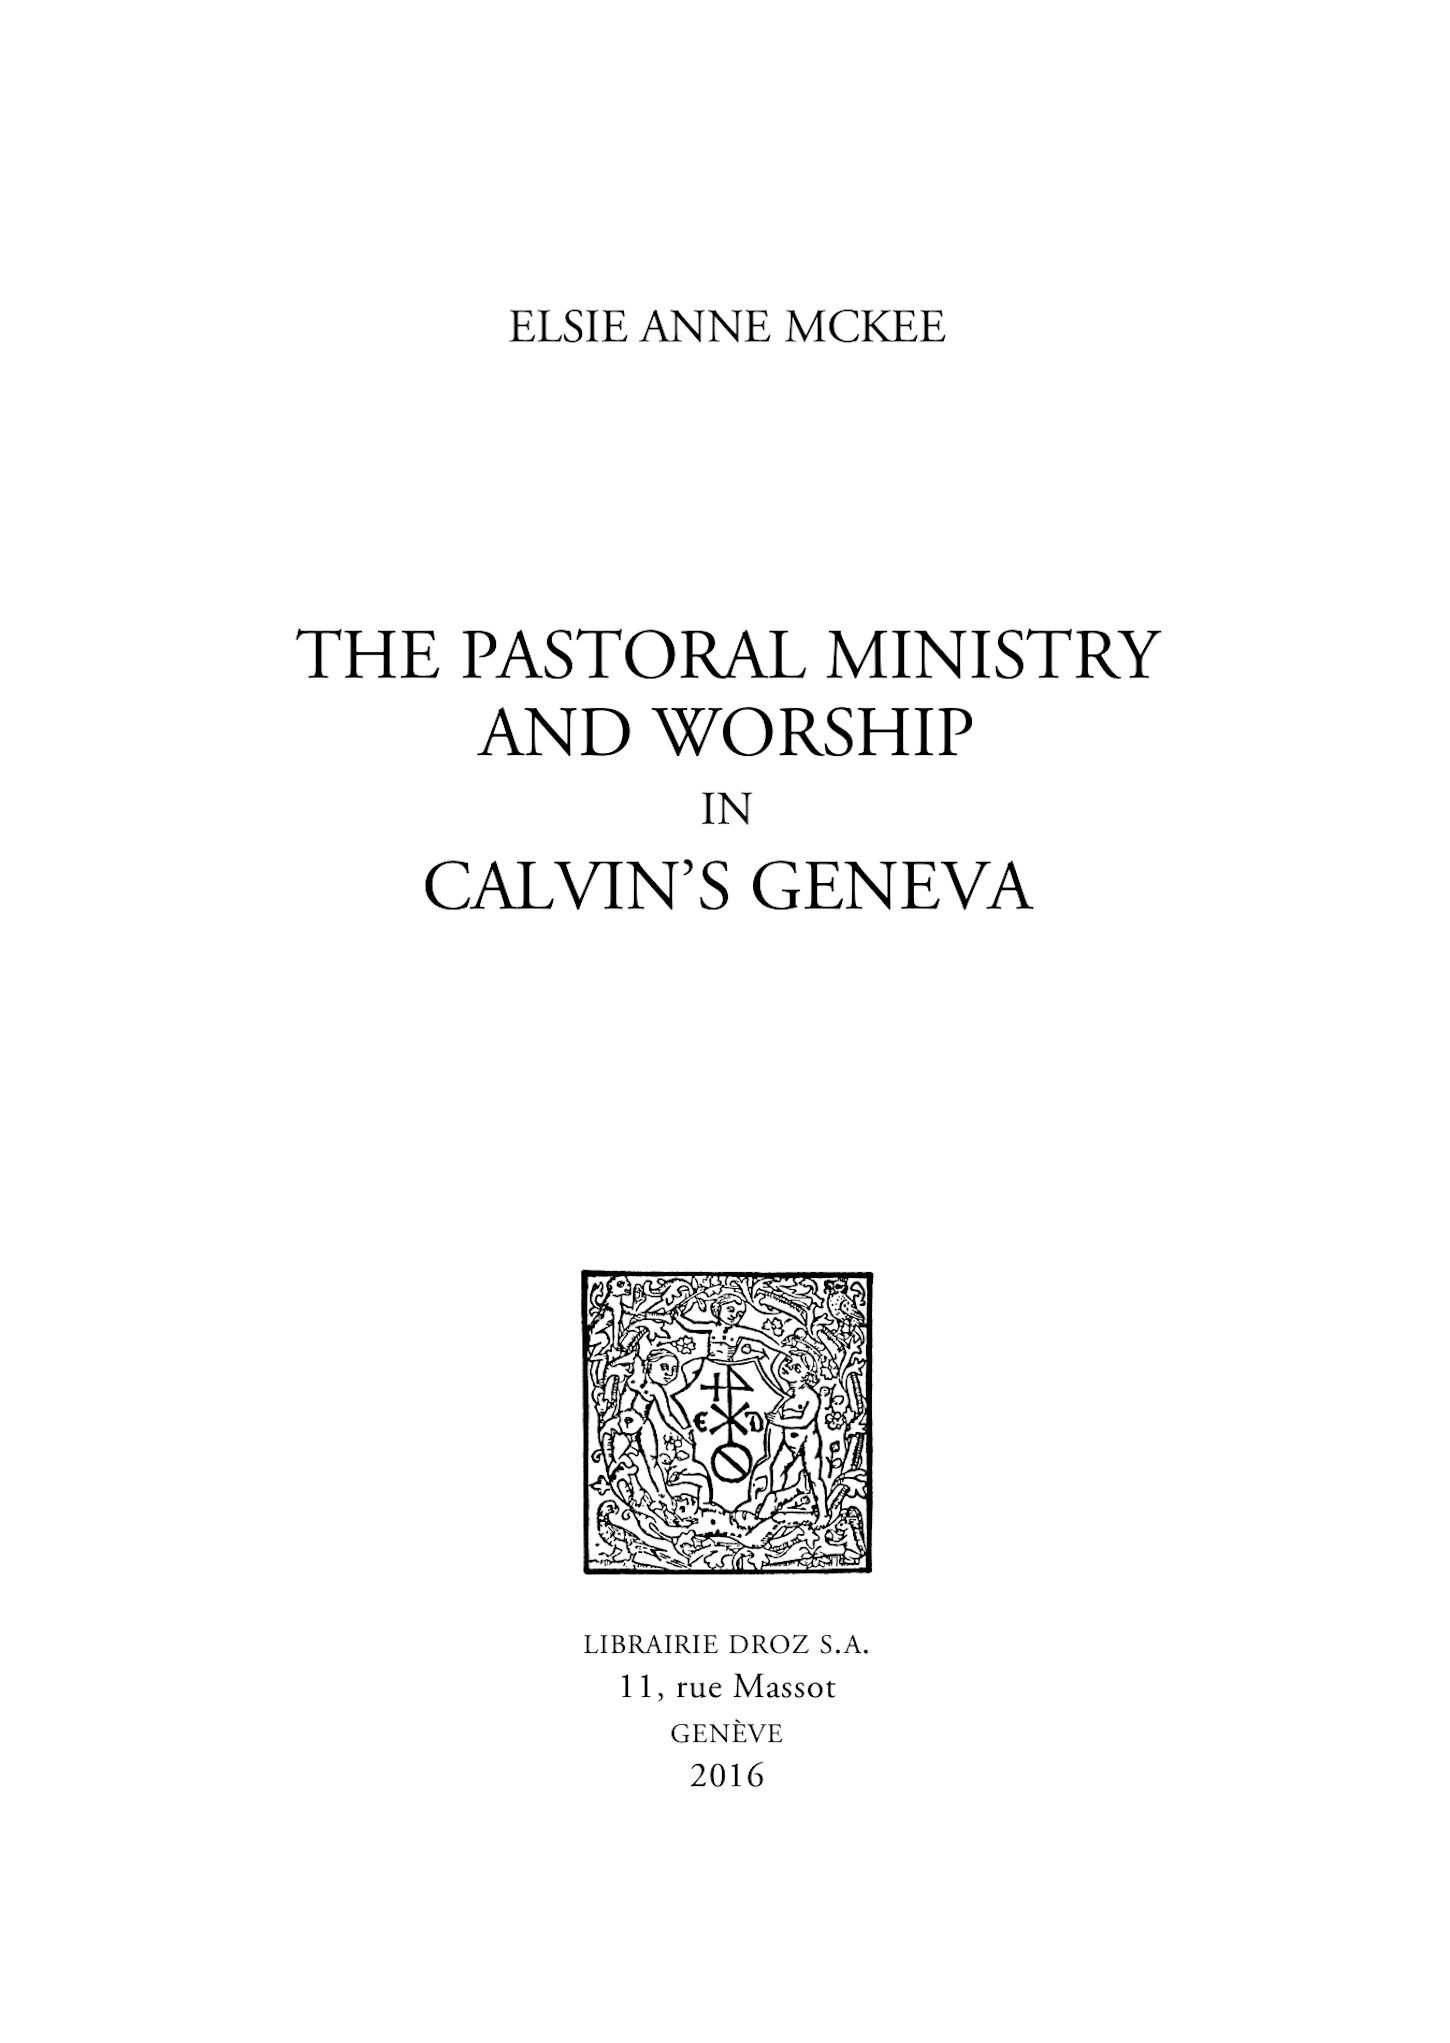 The Pastoral Ministry and Worship in Calvin's Geneva De Elsie Anne Mckee - Librairie Droz